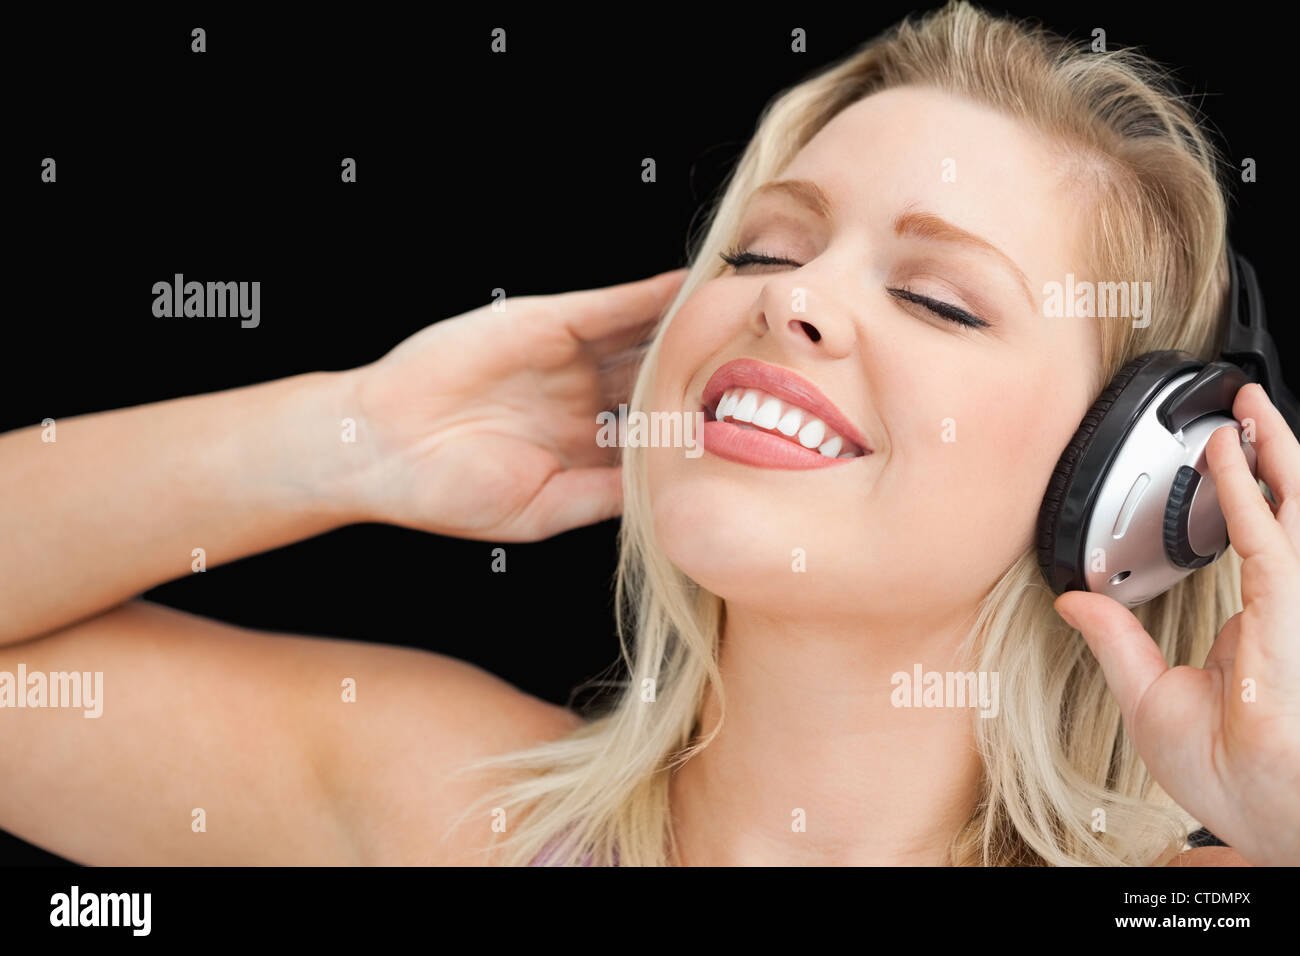 Joyful blonde woman listening to music through headphones Stock Photo